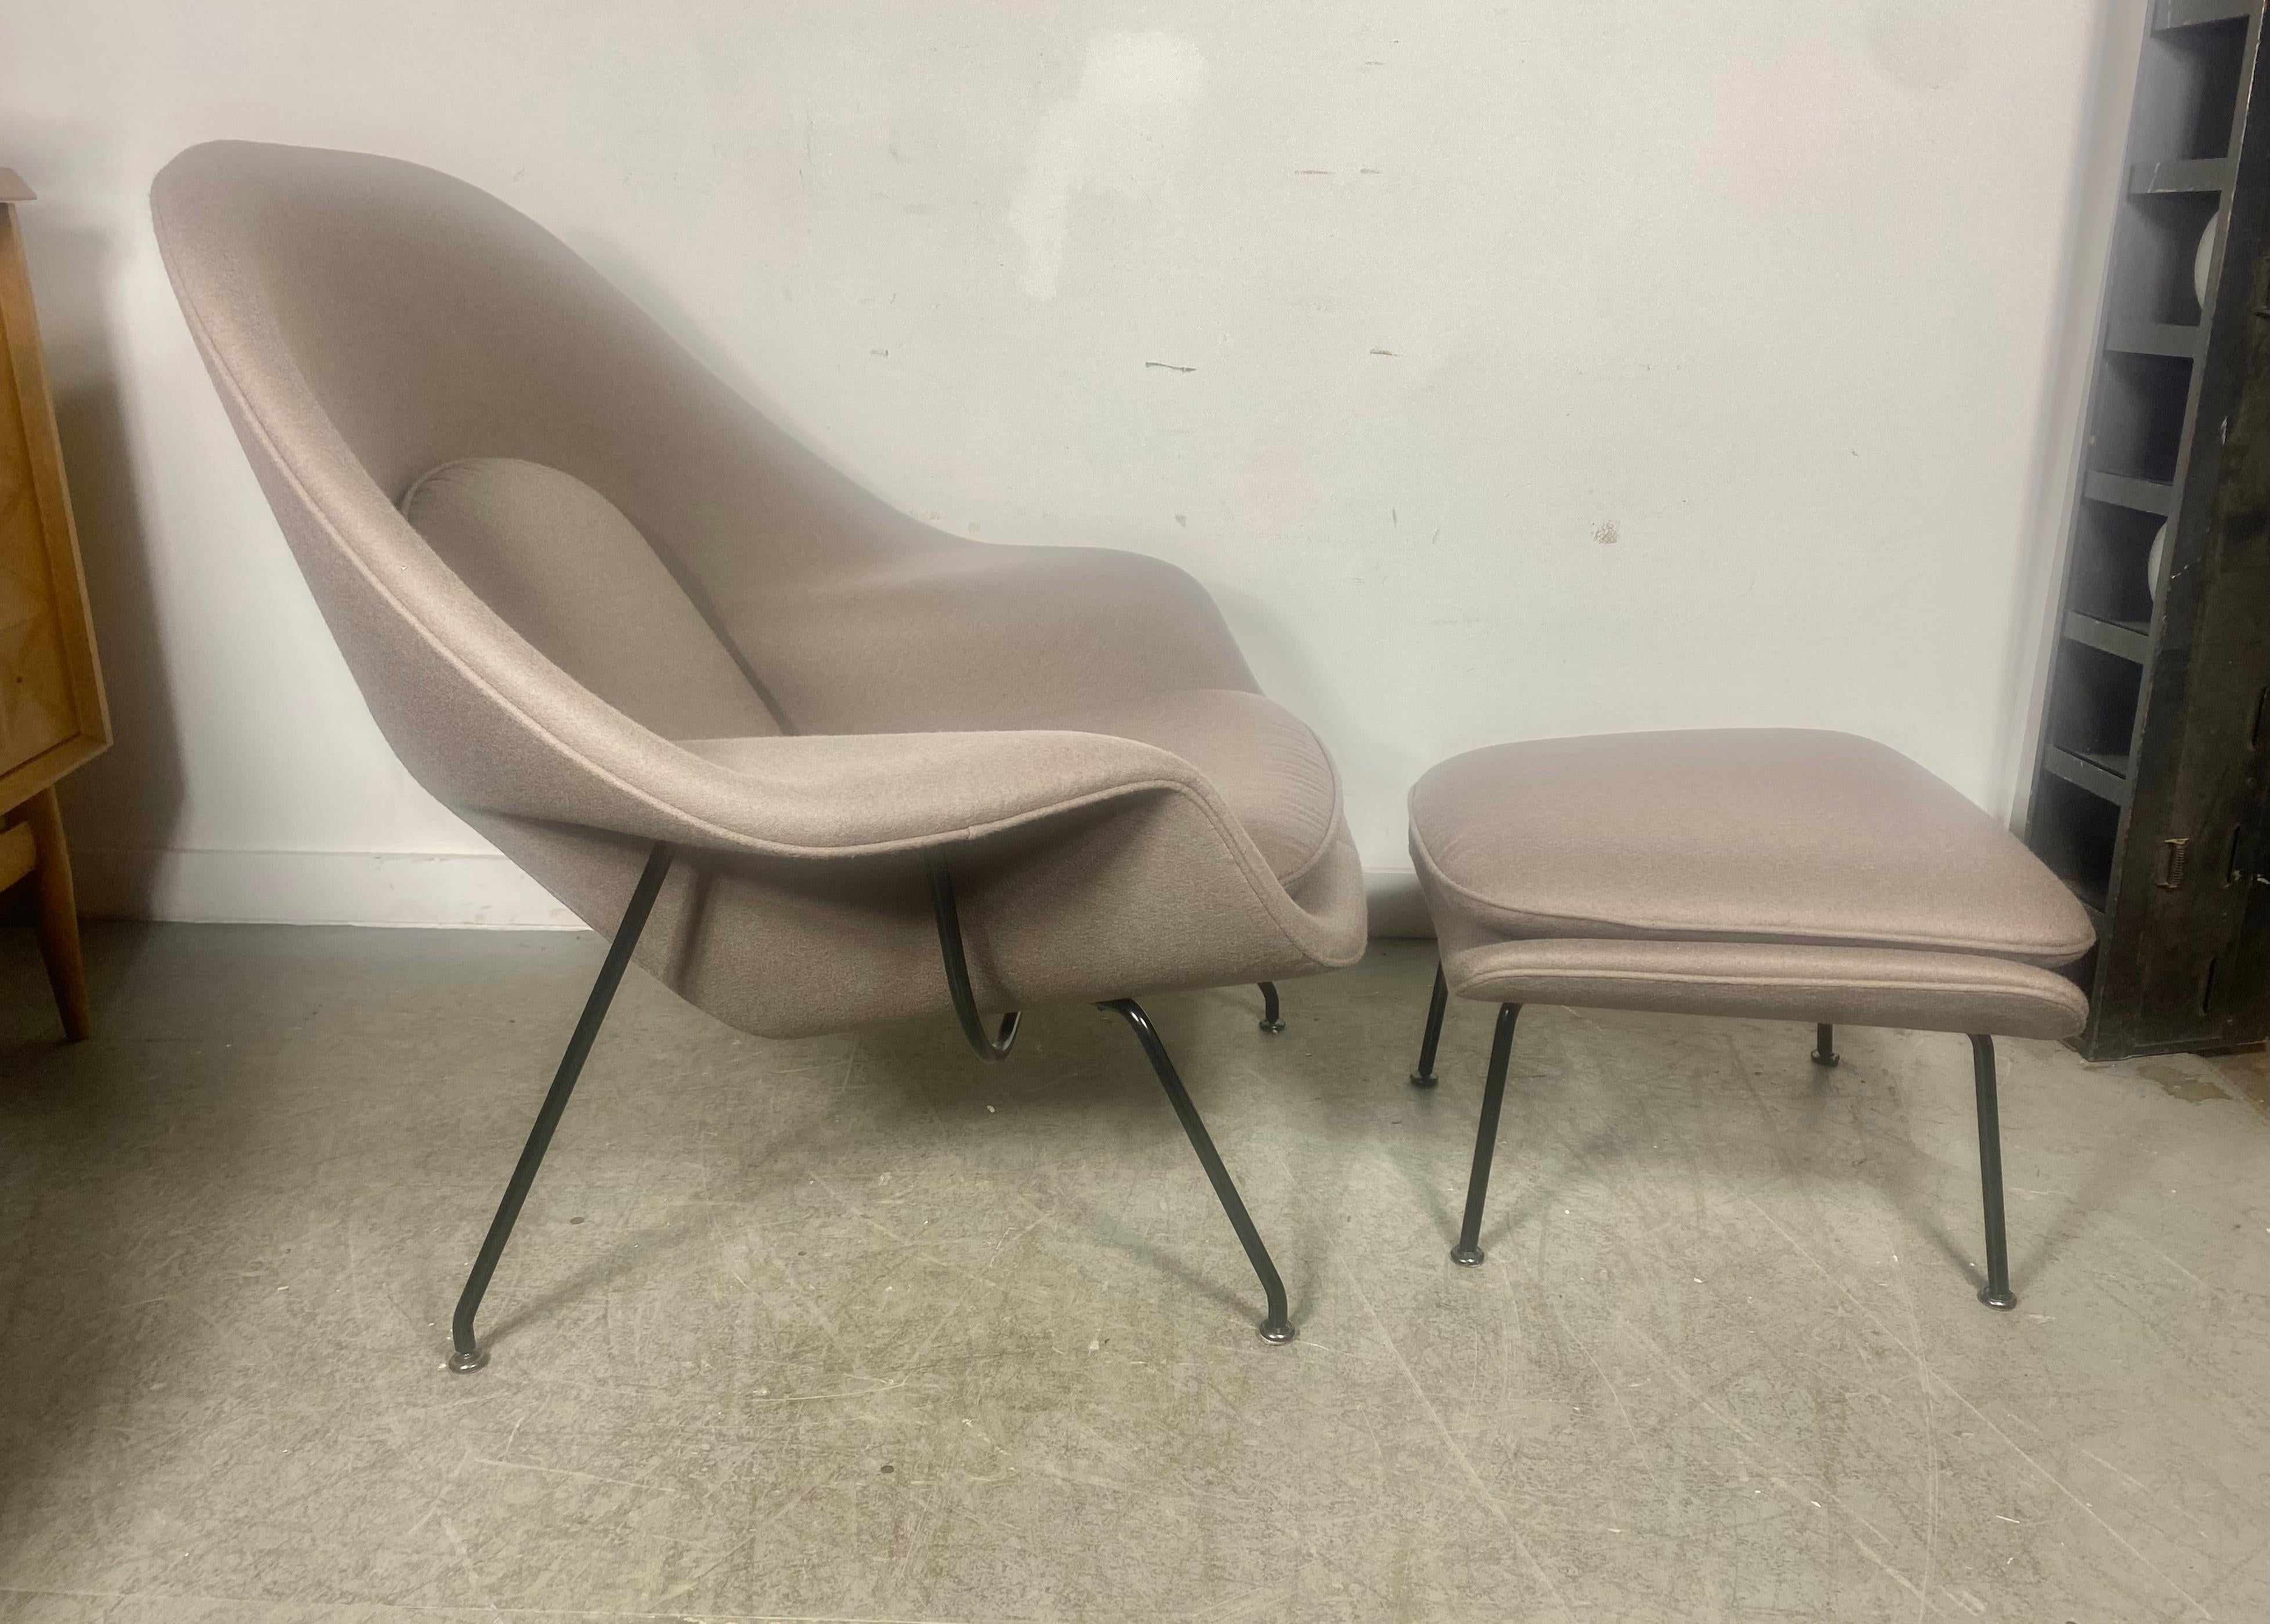 Eero Saarinen for Knoll Womb chair and ottoman. Custom Ordered “Puff” Mocha color upholstery 